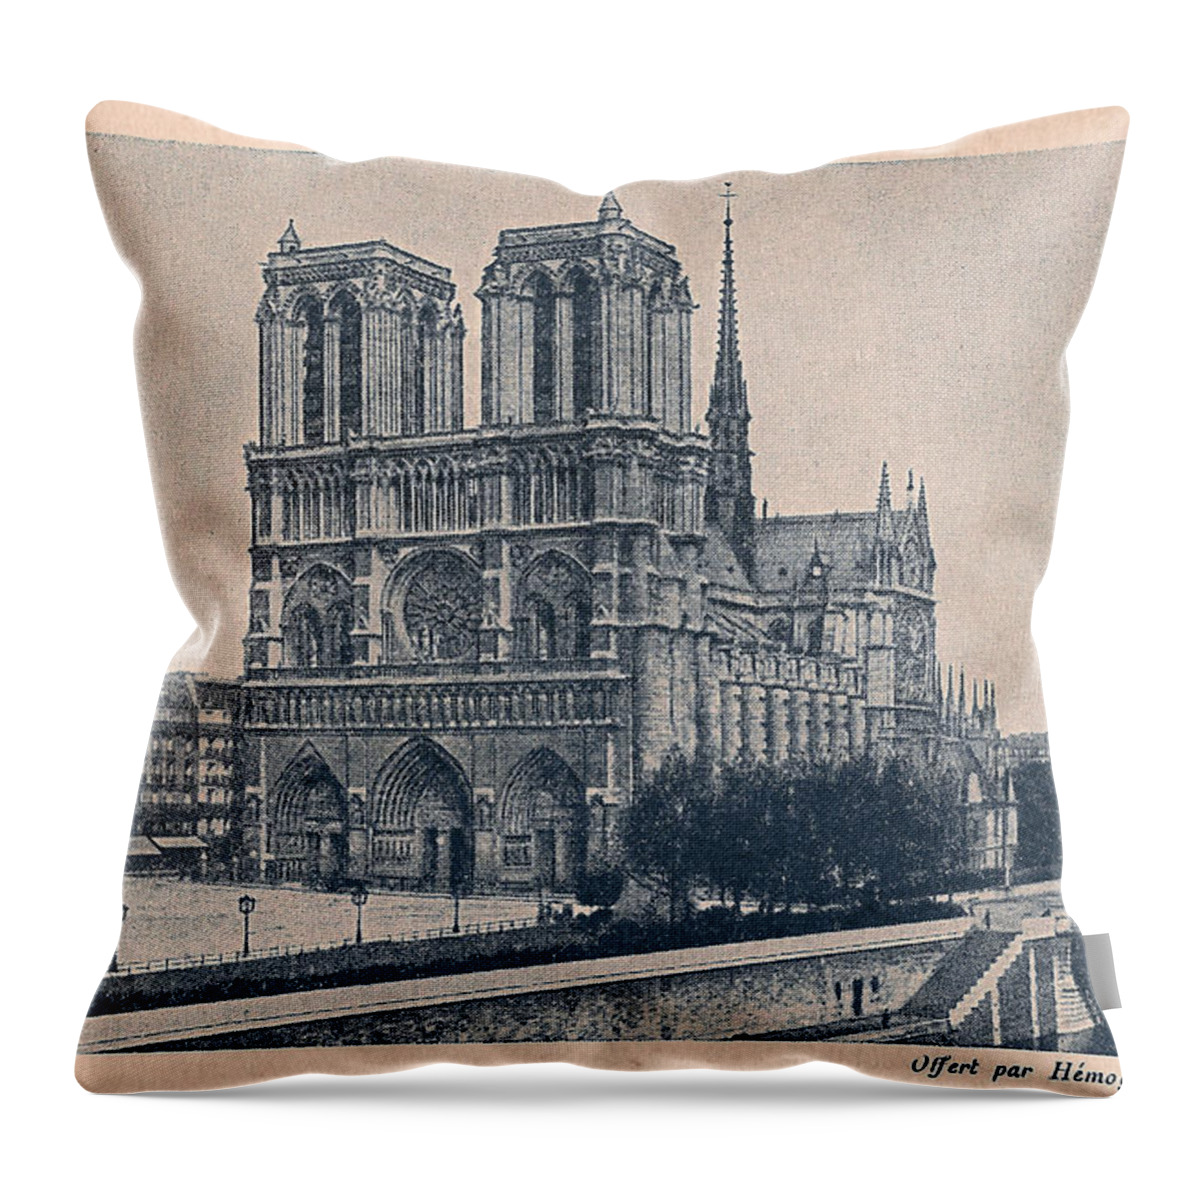 Paris Throw Pillow featuring the digital art Paris - Notre Dame by Georgia Clare